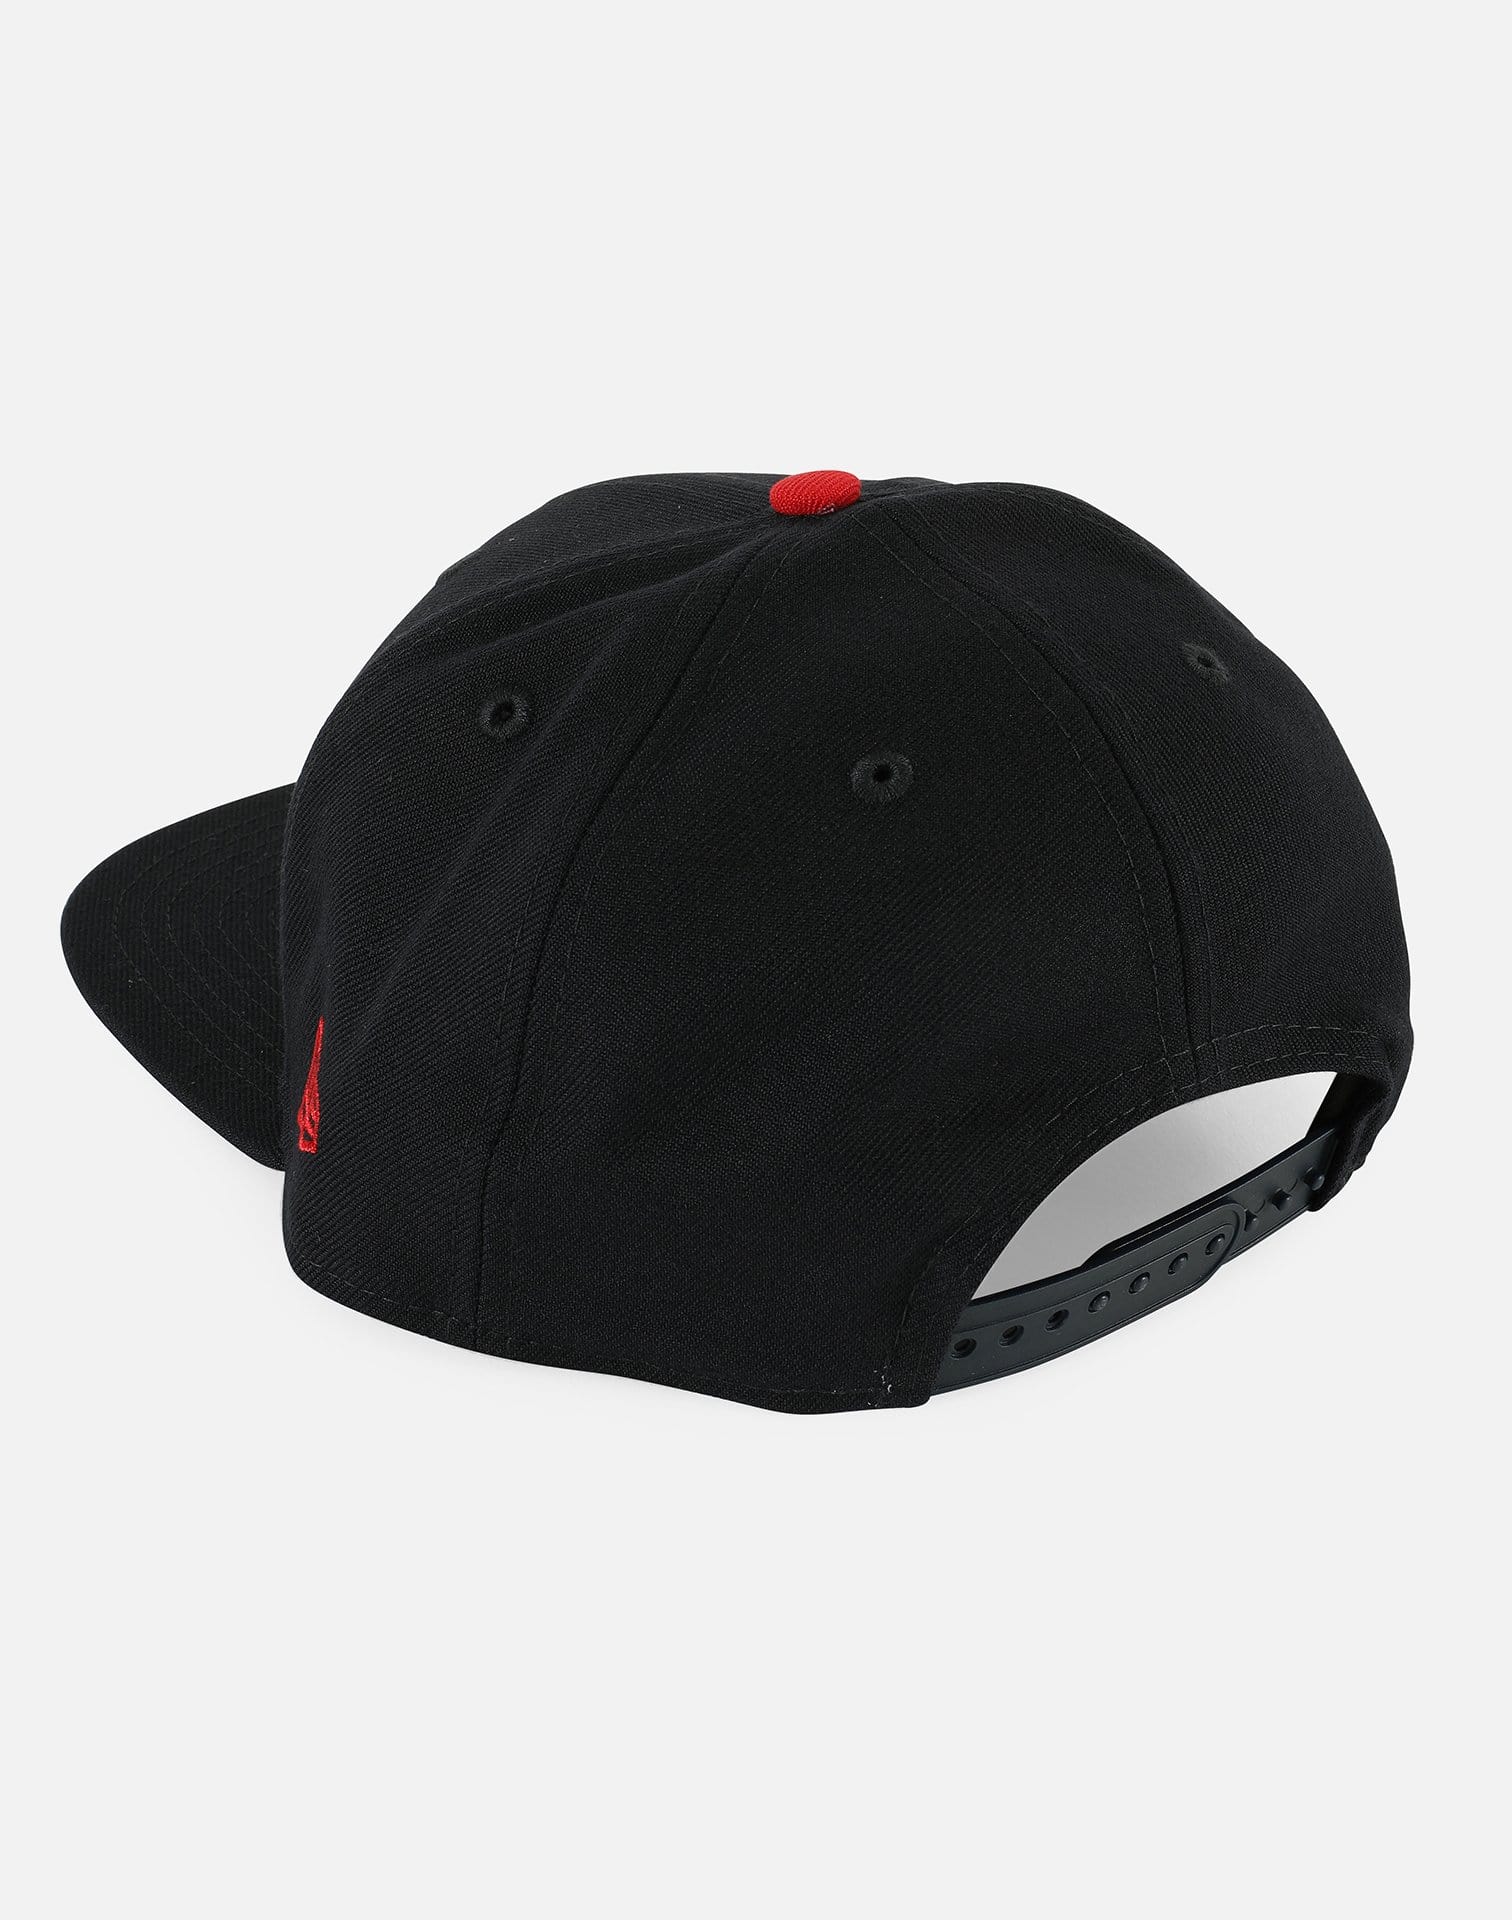 New Era NYC DTLR VILLA Exclusive 9Fifty Snapback Hat